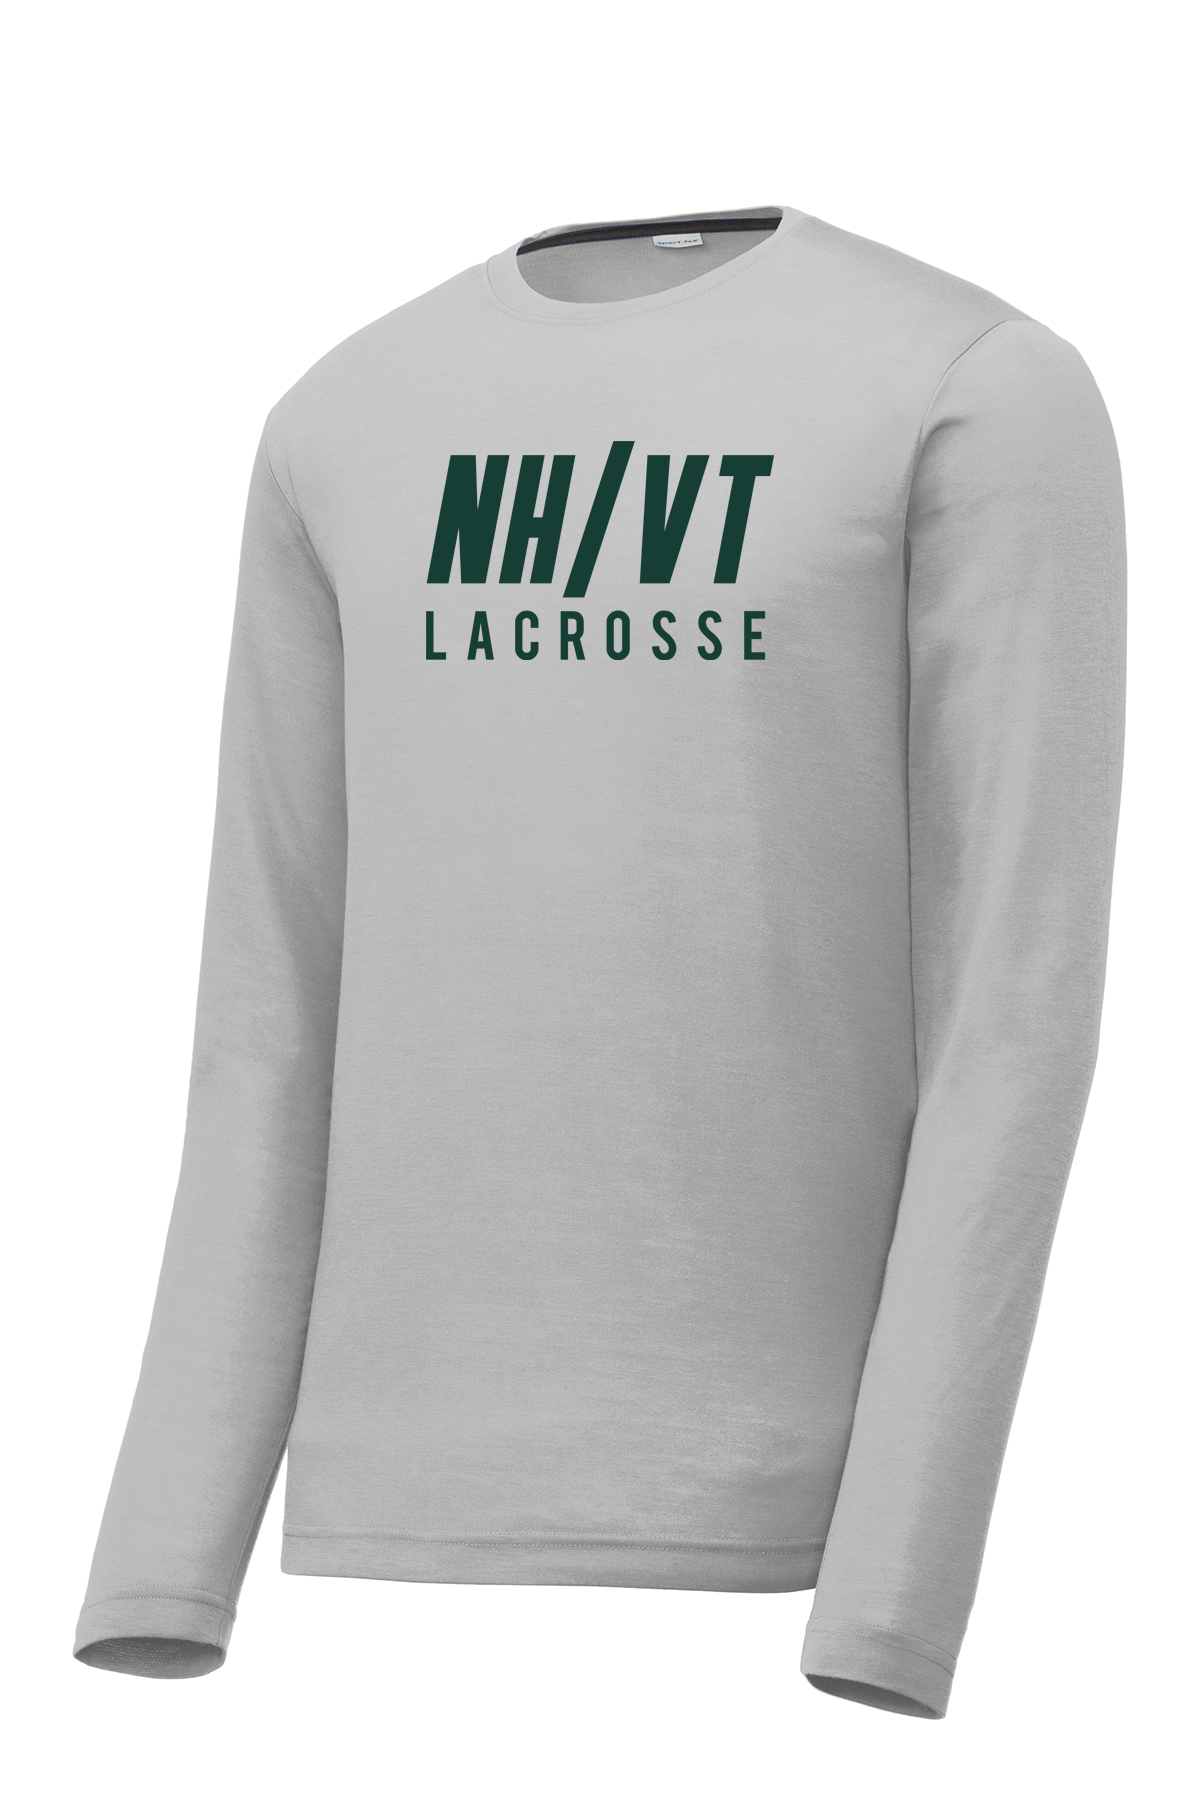 NH/VT Lacrosse  Long Sleeve CottonTouch Performance Shirt